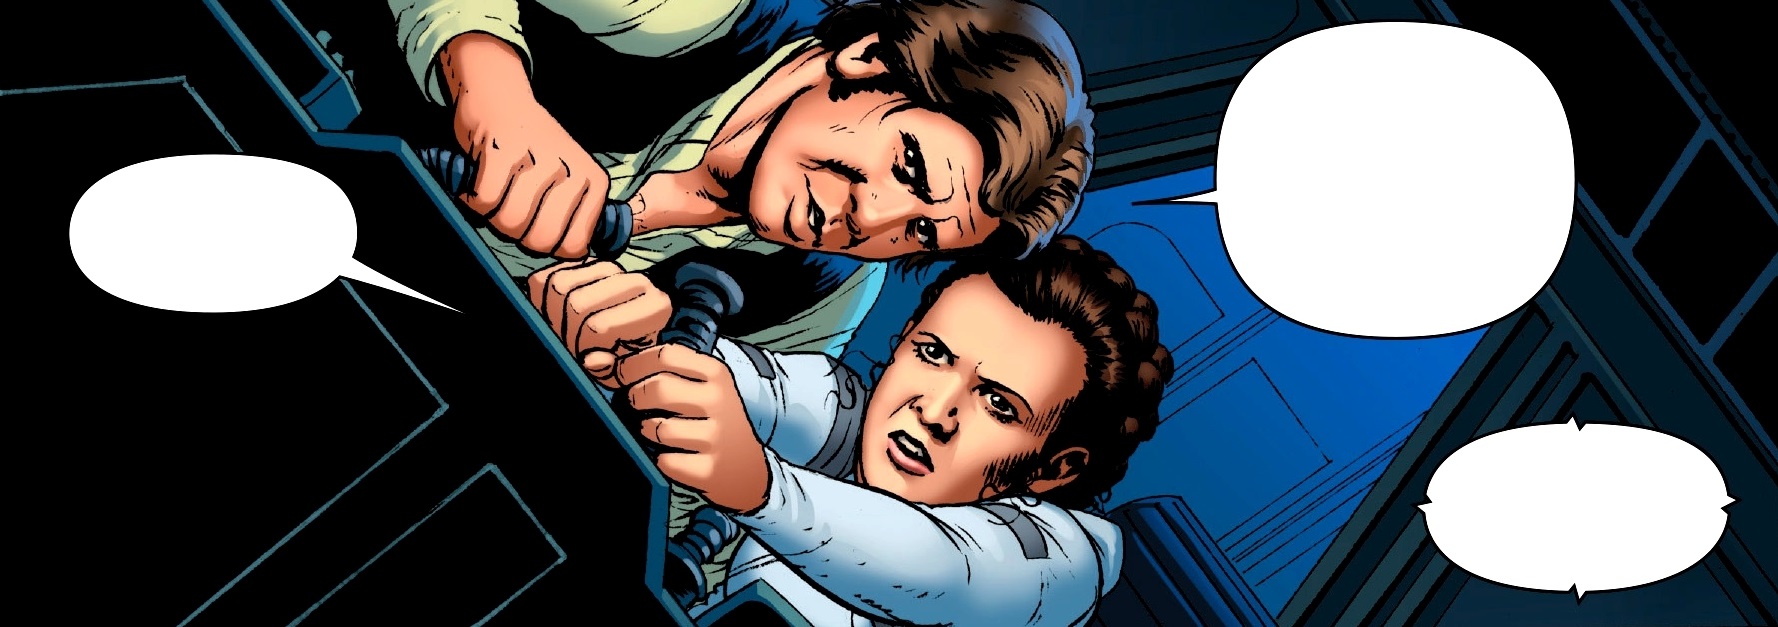 Plik:Leia i Han sie czubia.jpg